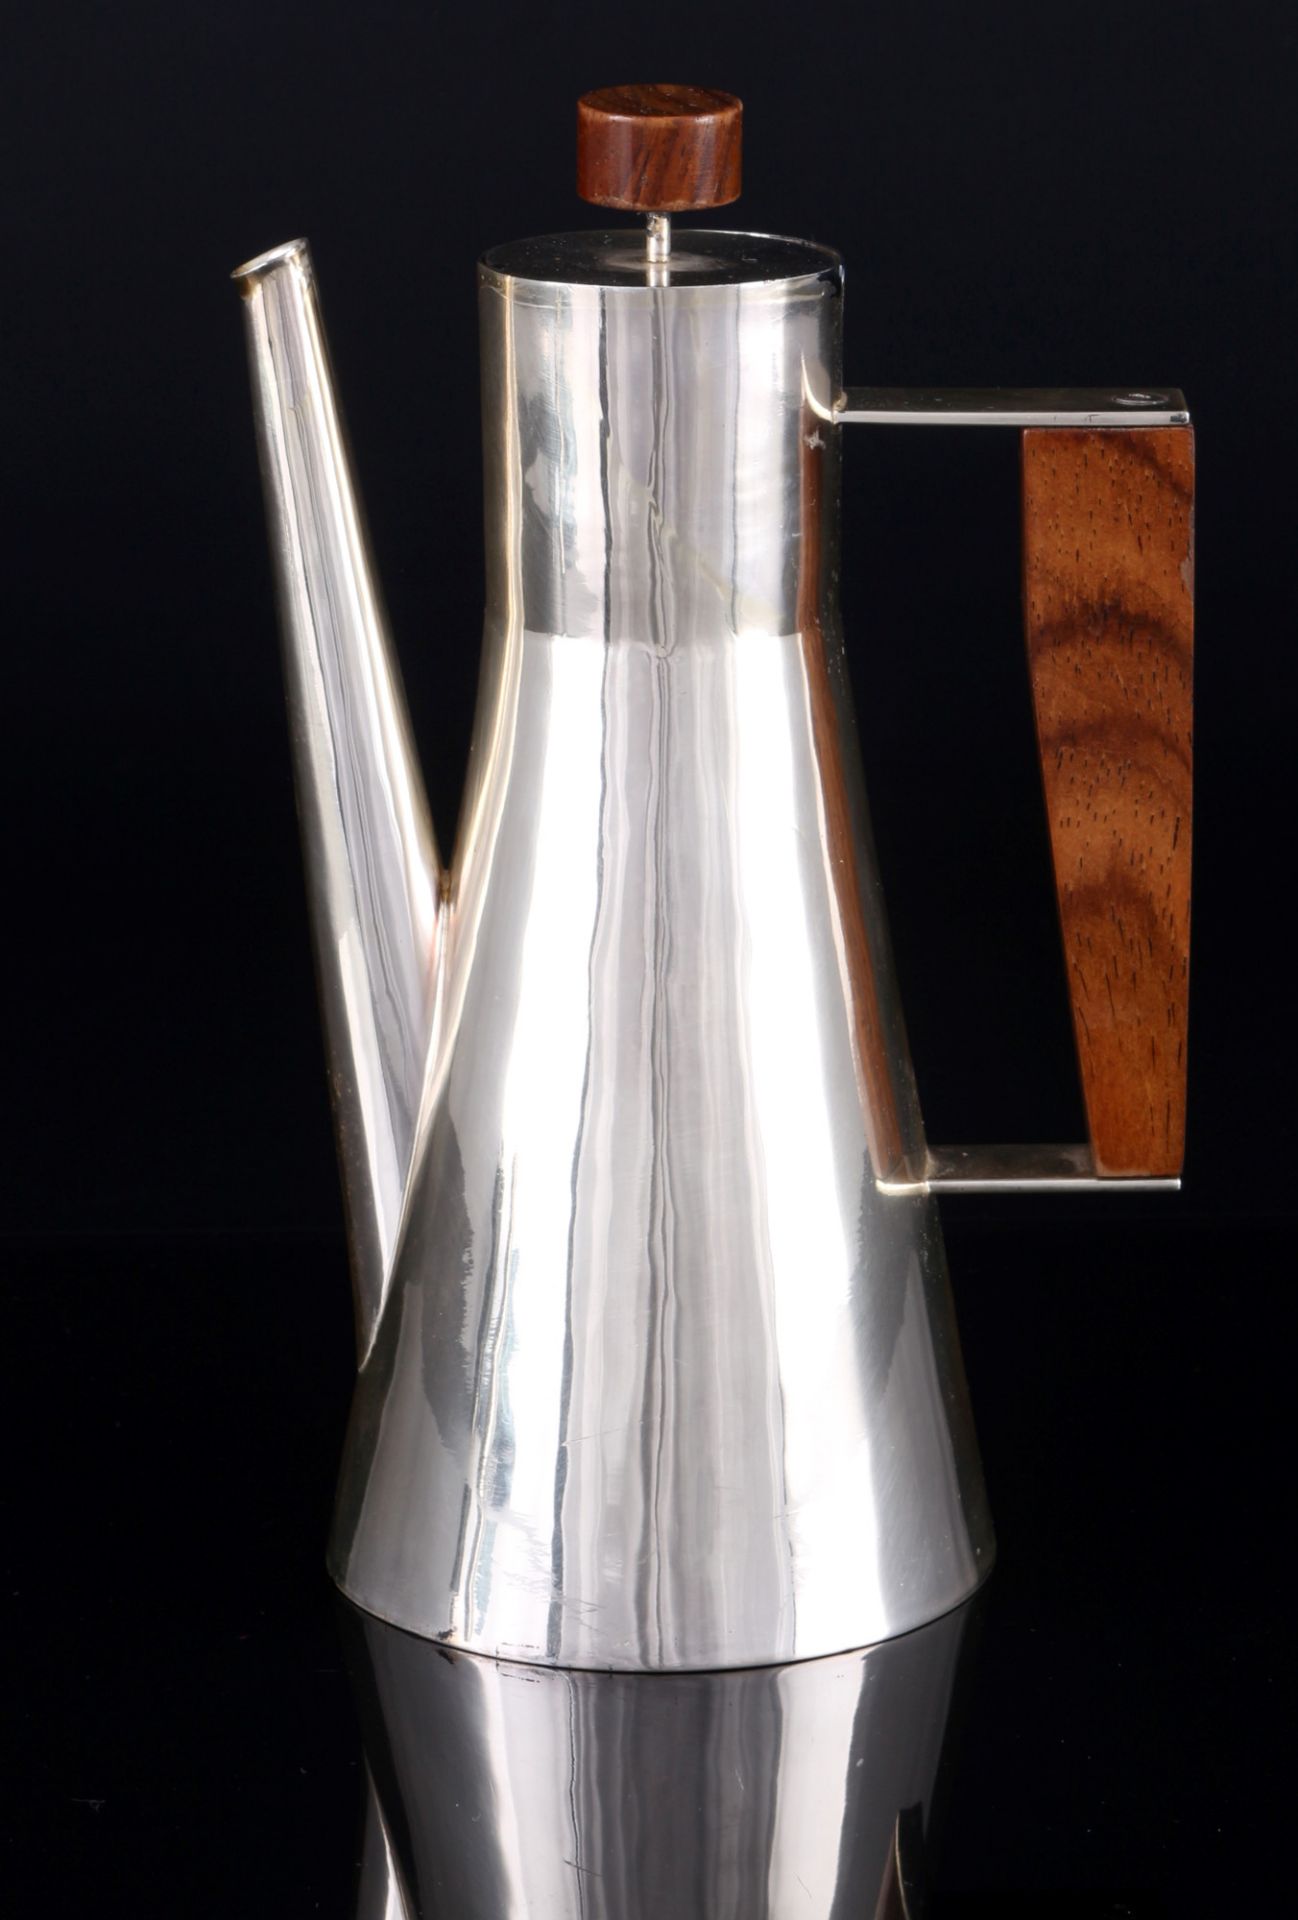 835 silver mocha coffee set, Bauhaus period, Silber Mokka Kaffeekern, - Image 2 of 4